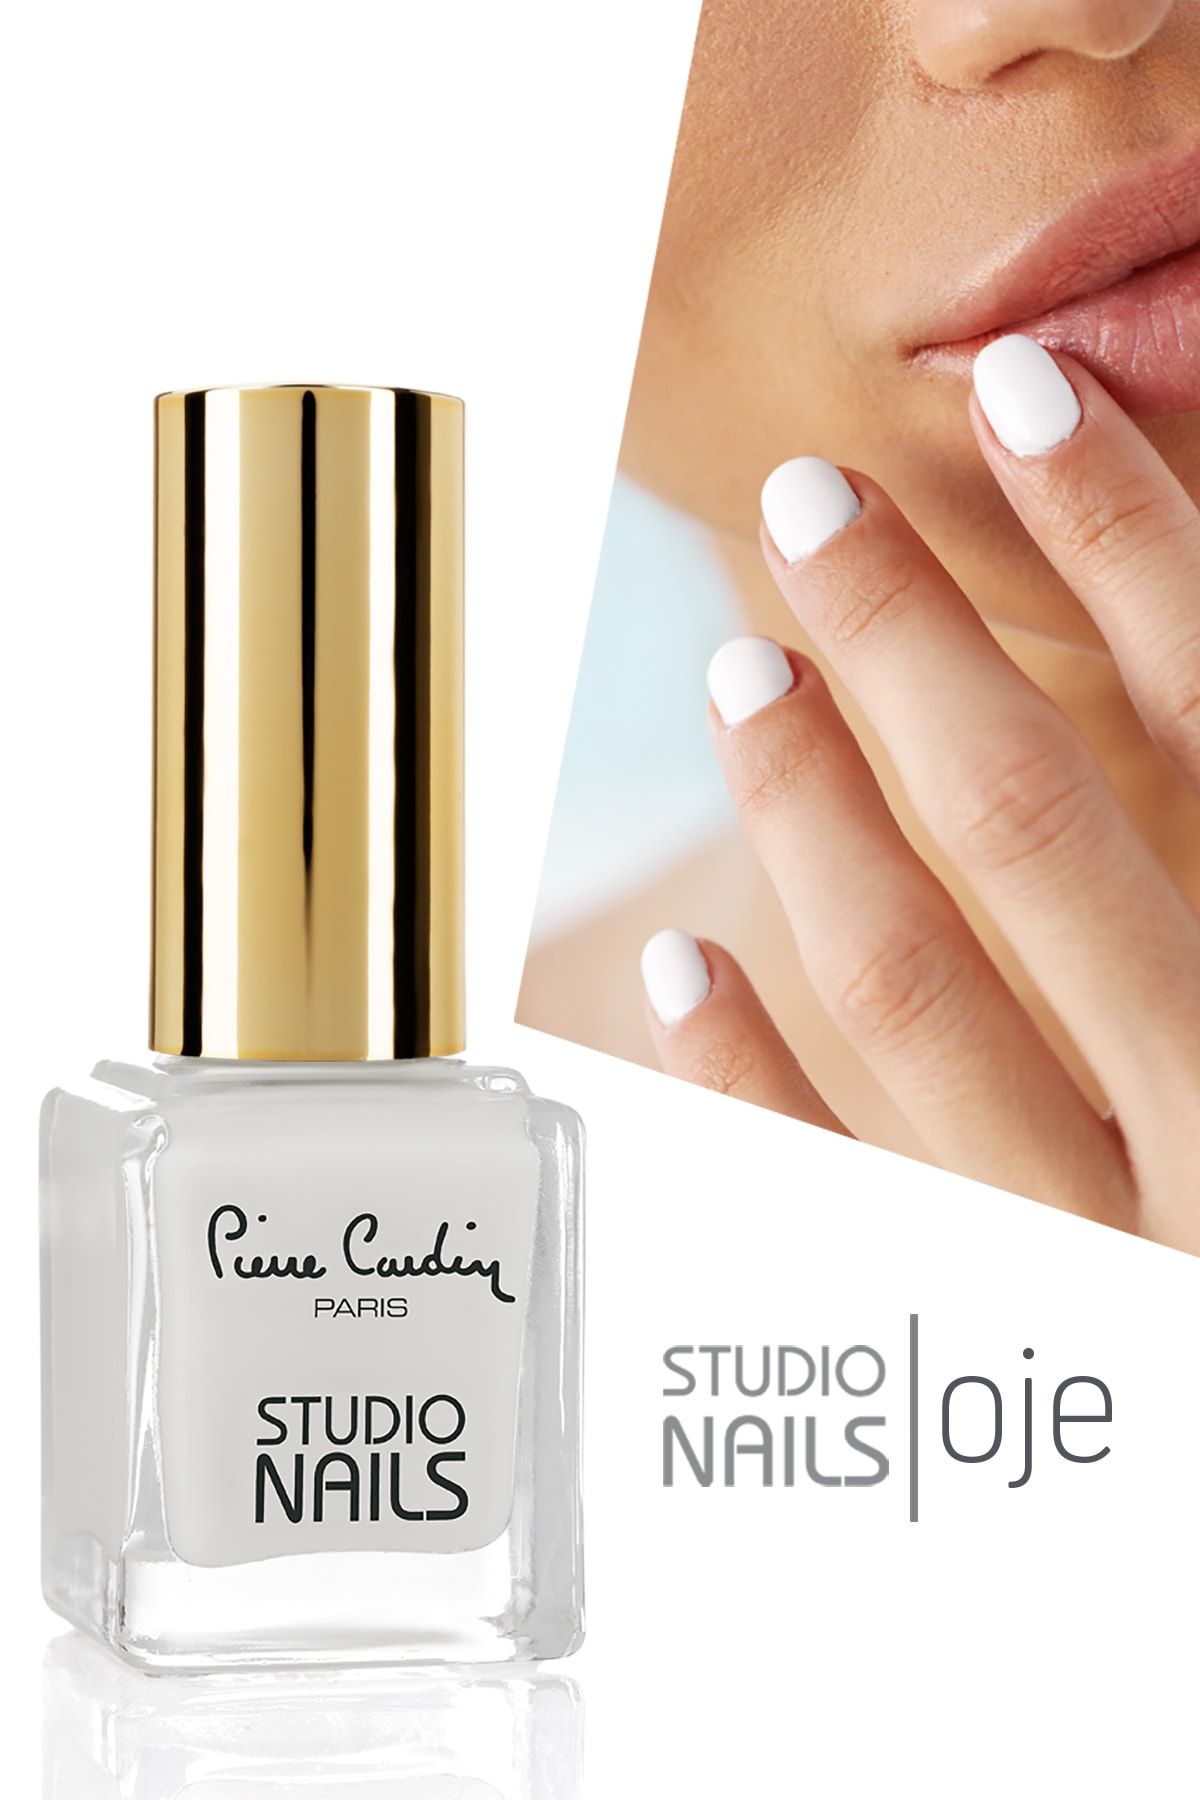 Pierre Cardin Studio Nails Oje - 012 14266